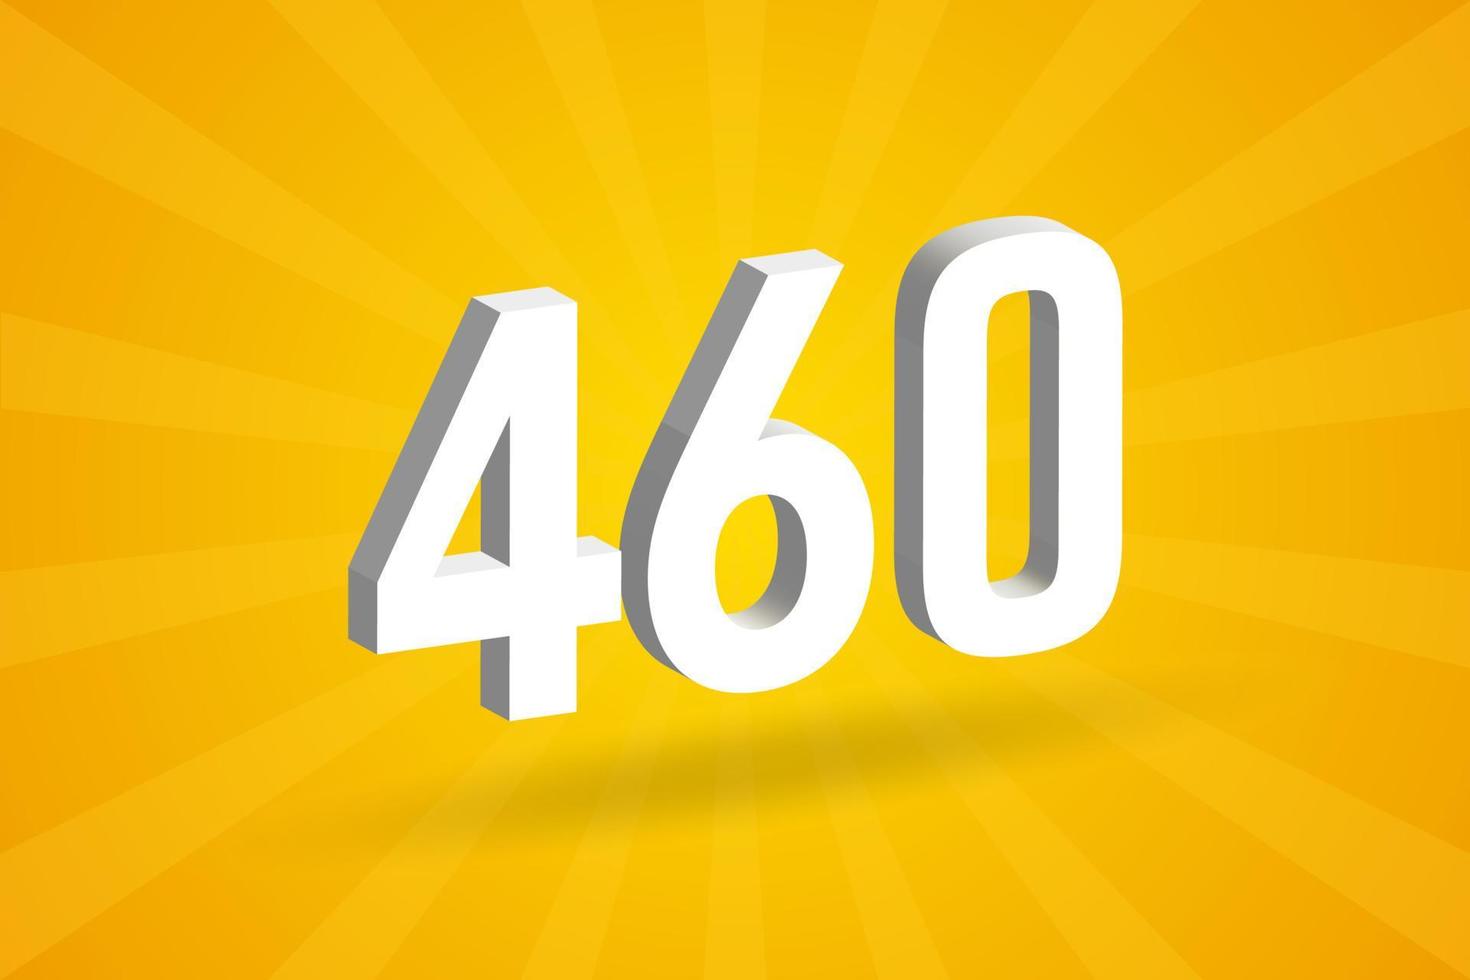 3d 460 siffra font alfabet. vit 3d siffra 460 med gul bakgrund vektor